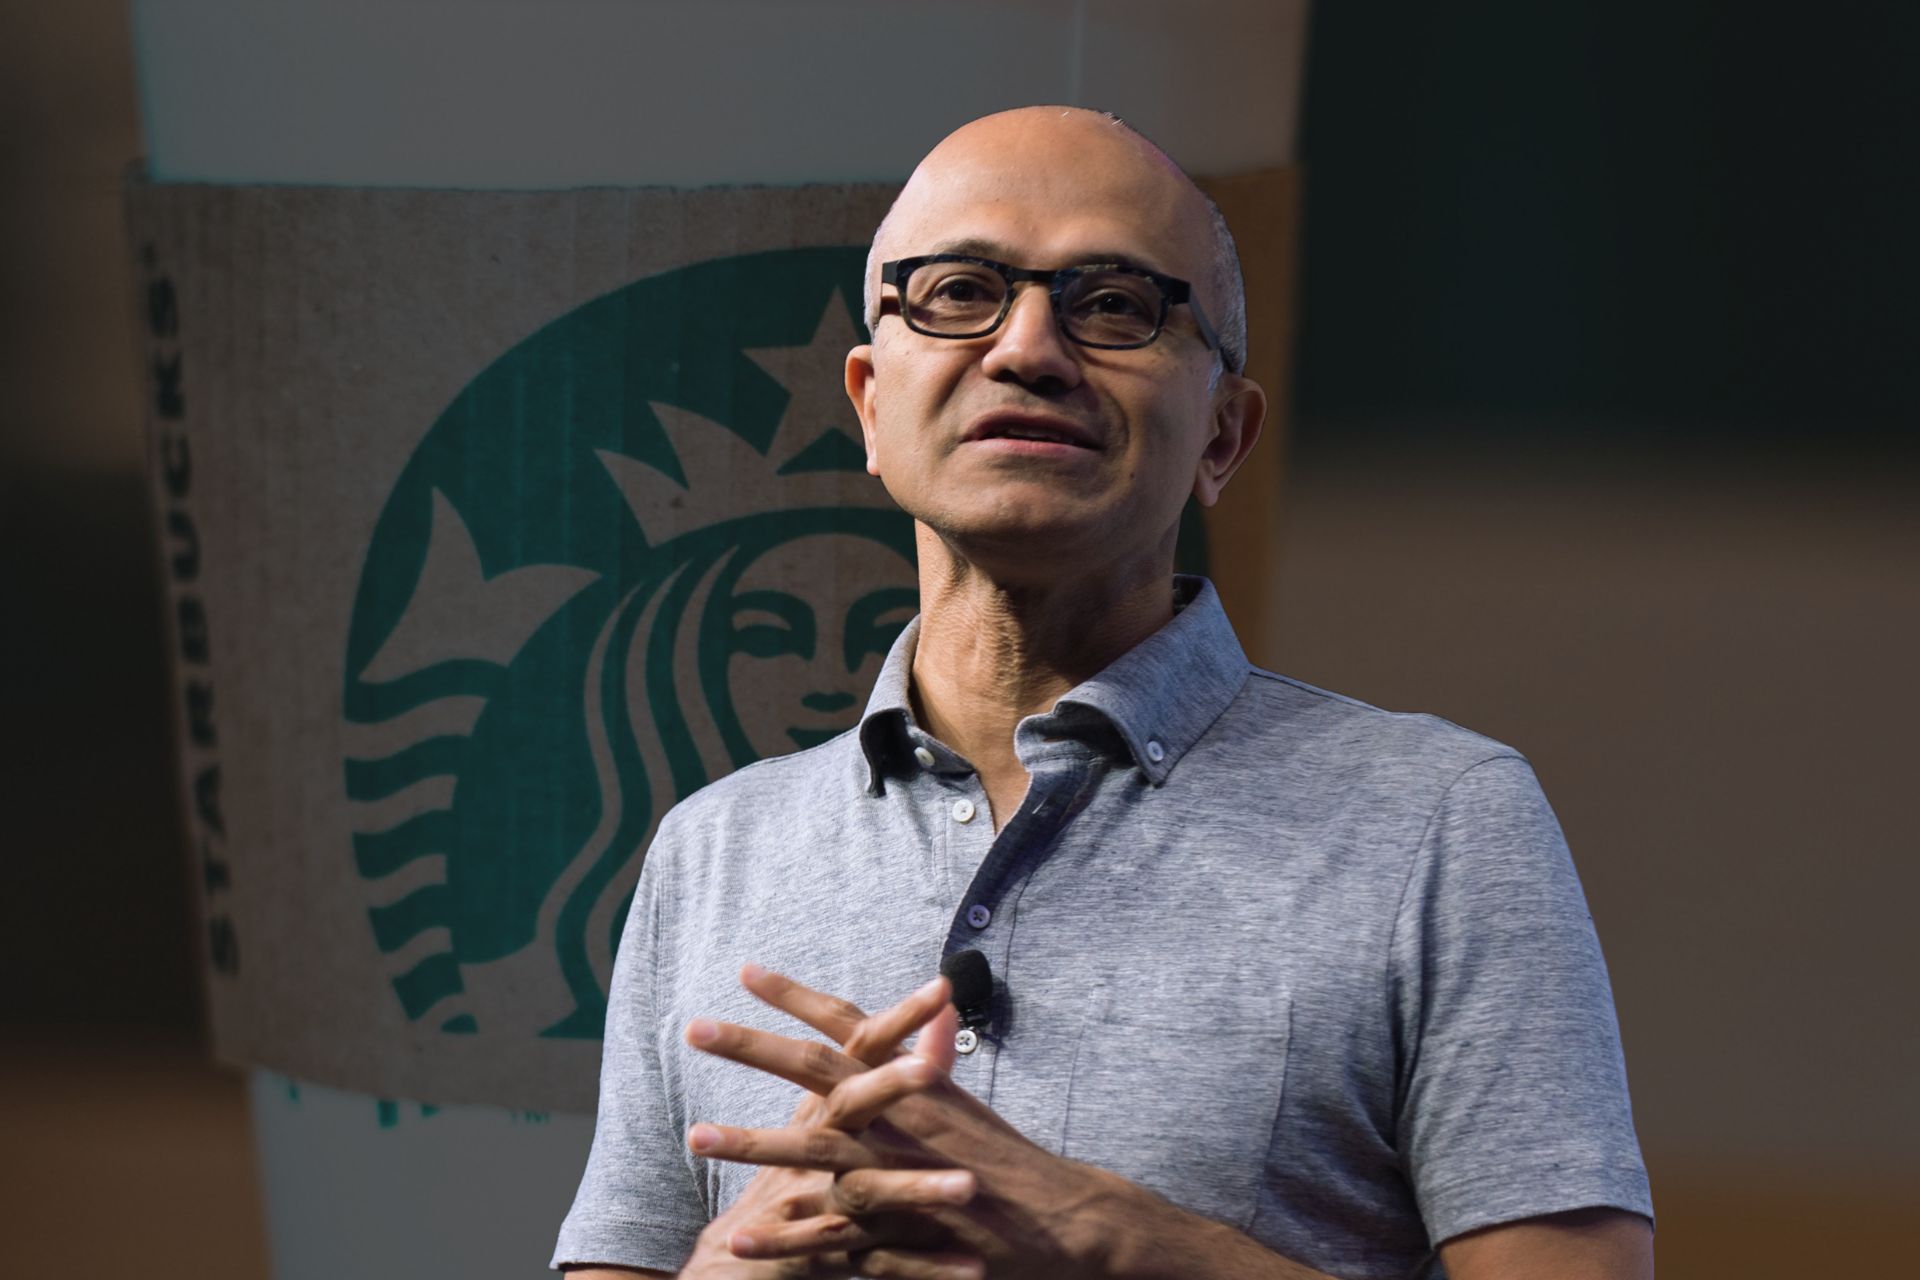 Microsoft's CEO Satya Nadella resignation from Starbucks board with immediate effect